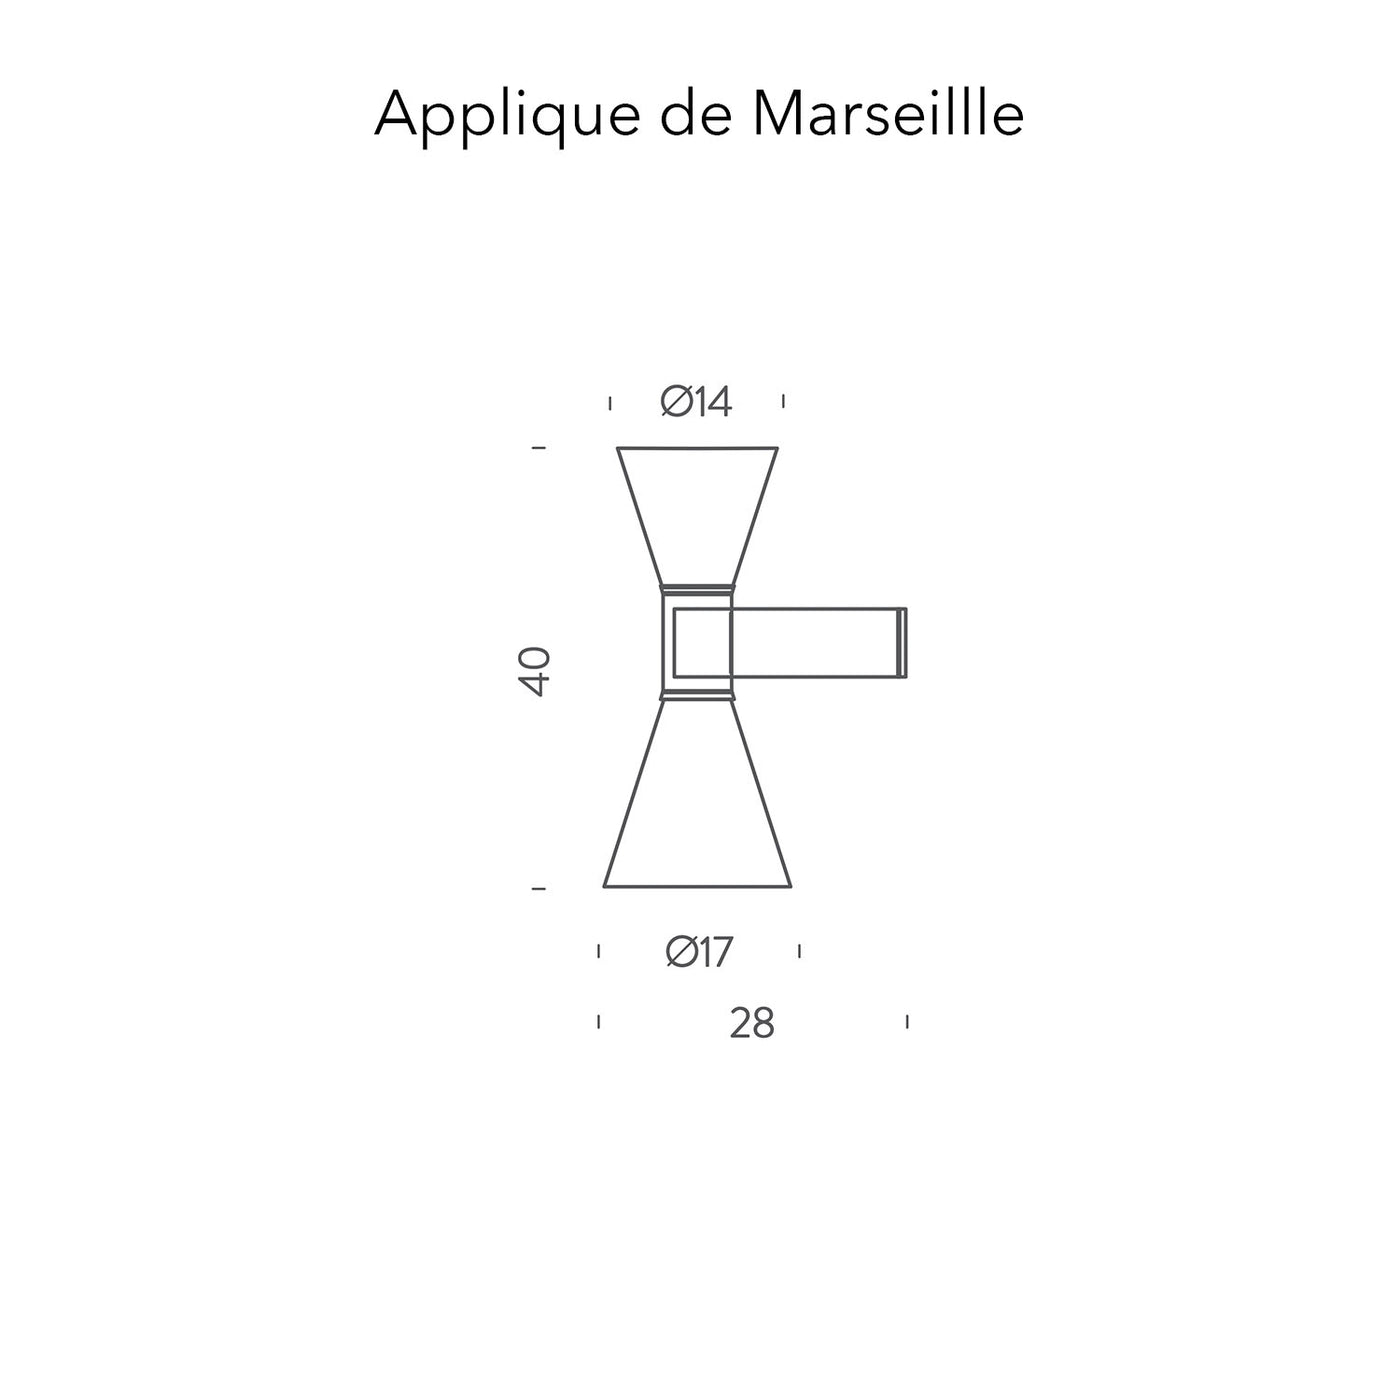 Applique de Marseille wall lamp